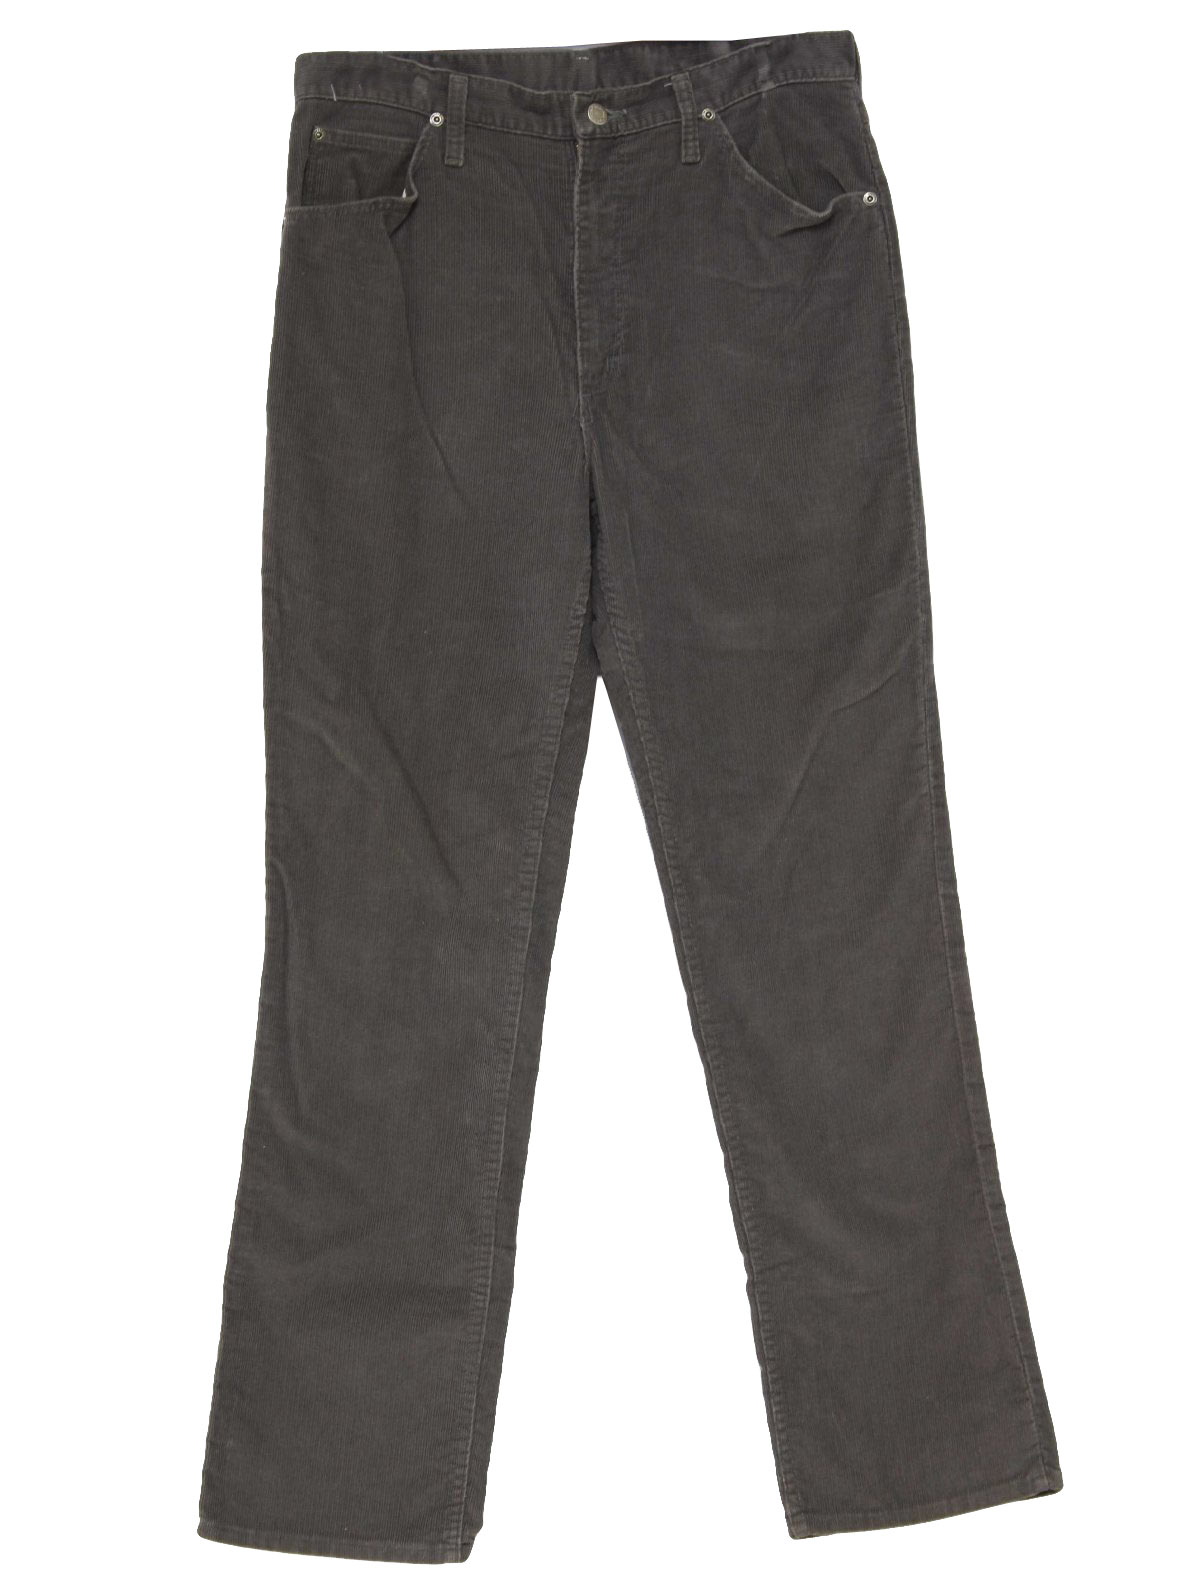 Retro 1980s Pants: 80s -Wrangler- Mens medium gray cotton polyester ...